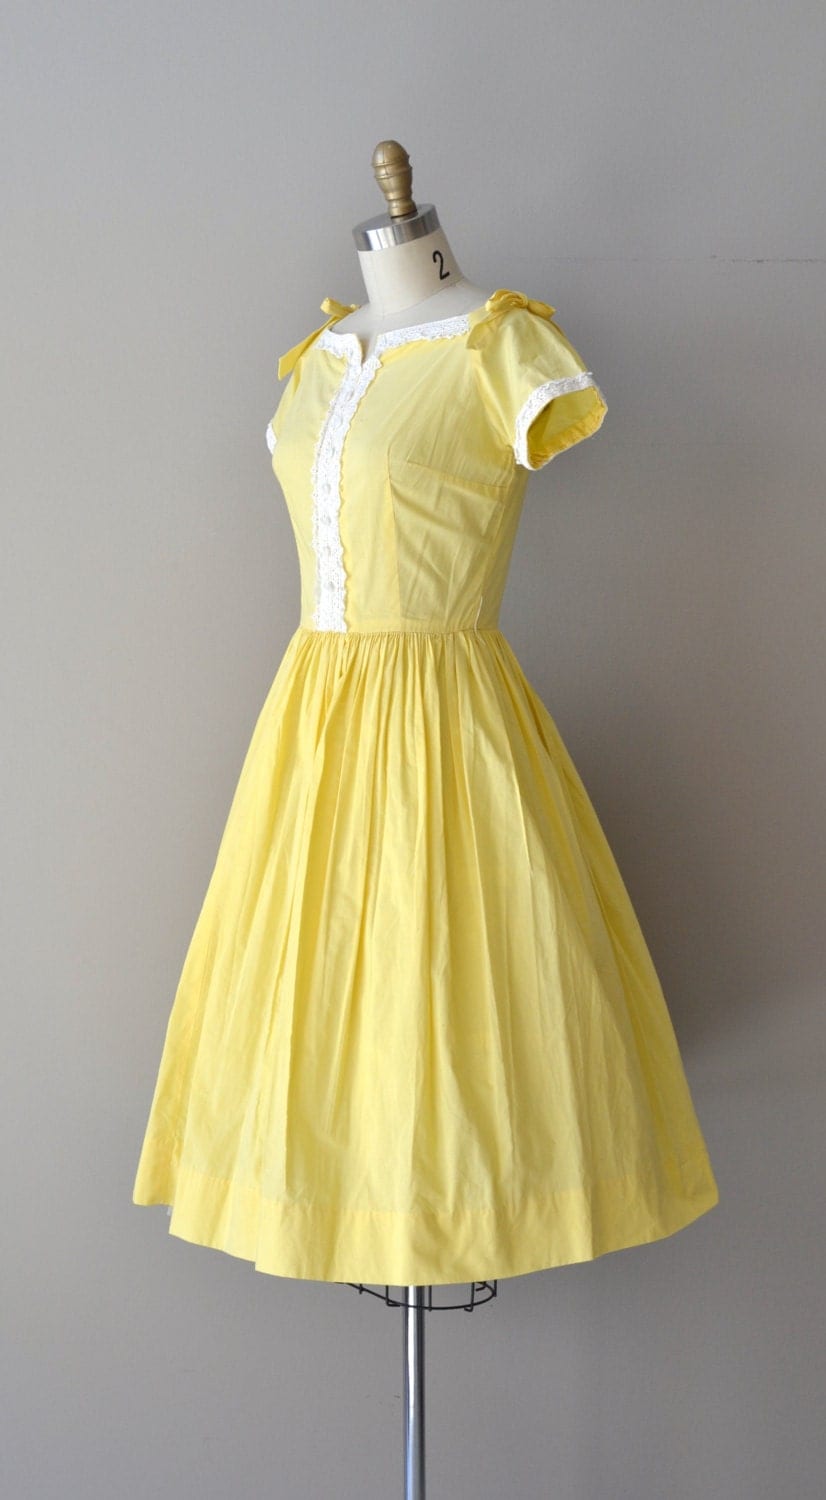 Sunnyside dress / vintage 1950s dress / cotton 50s dress